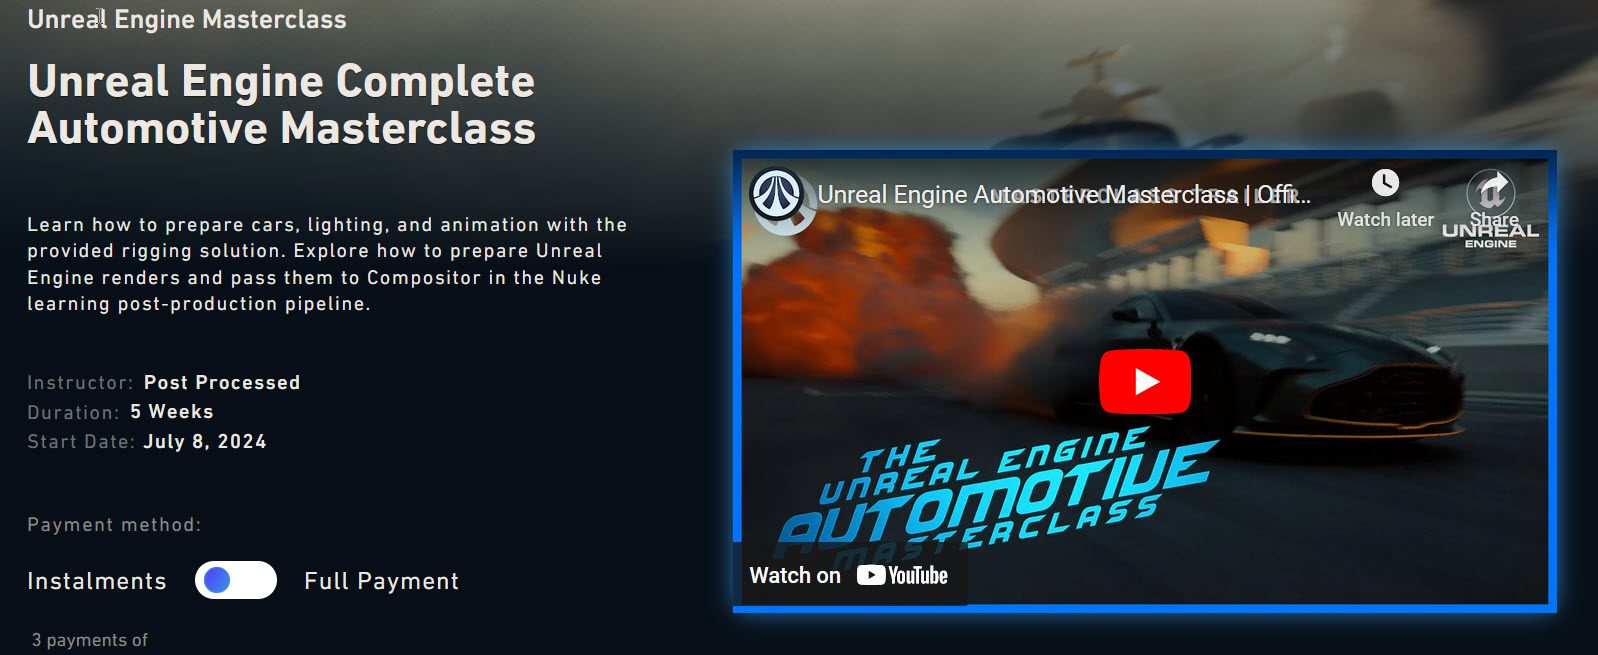 Double Jump Academy - Unreal Engine Complete Automotive Masterclass